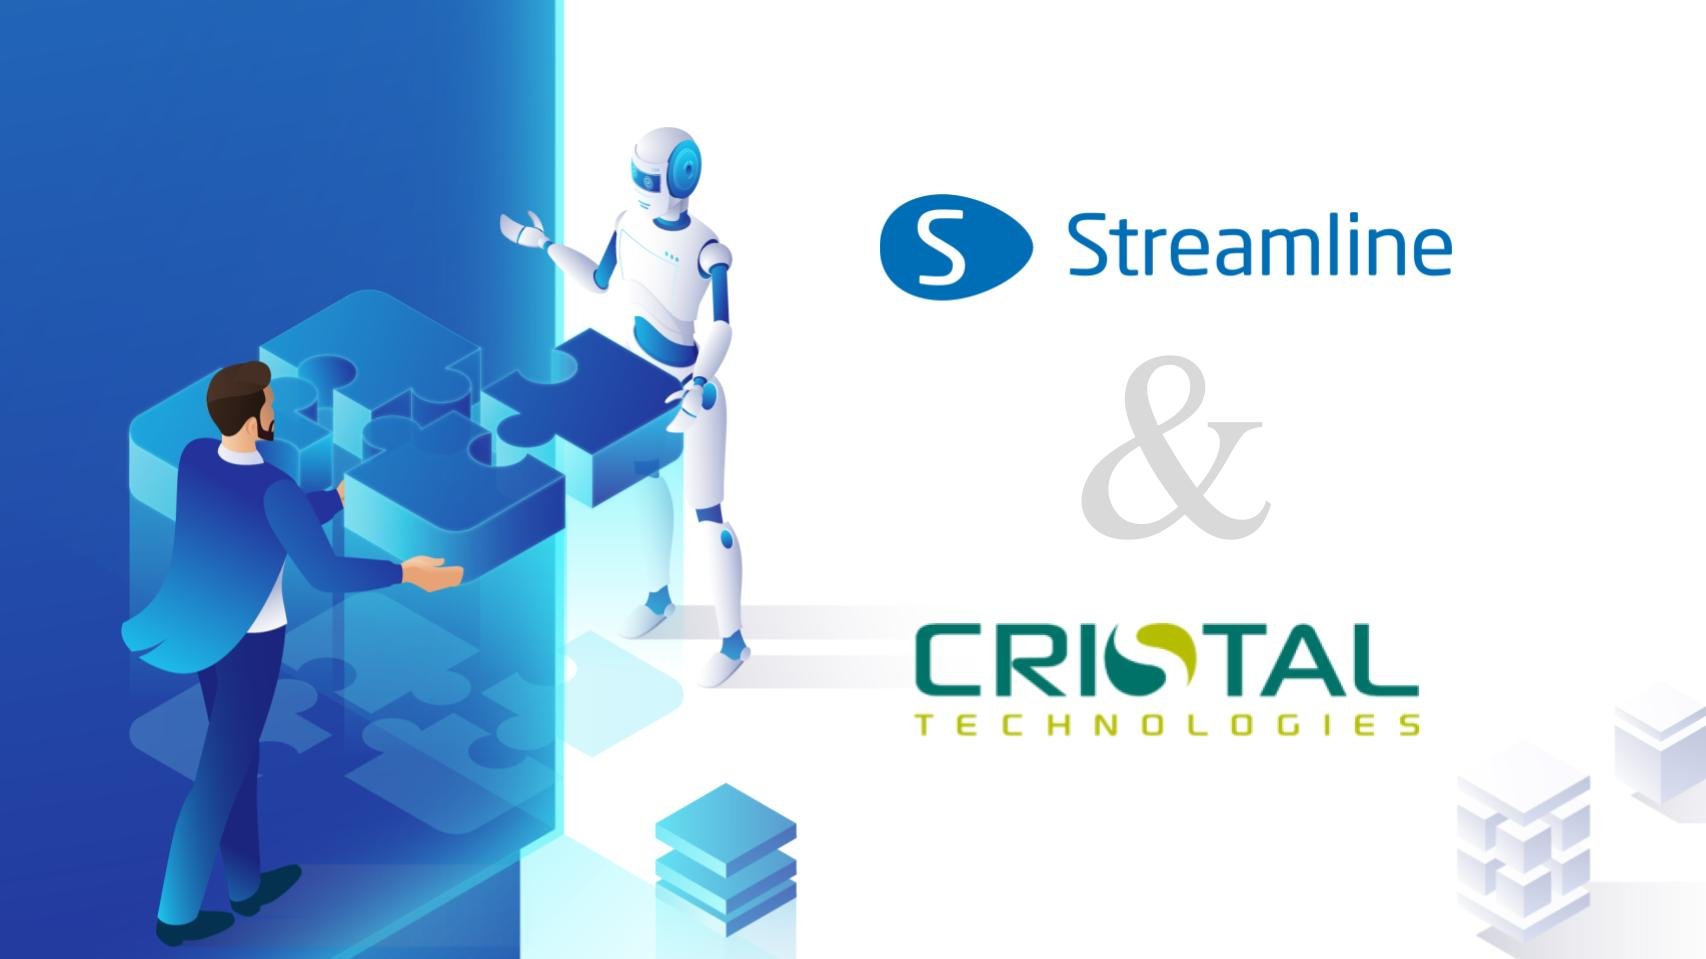 GMDH Streamline 與 Cristal Technologies 宣佈建立戰略合作夥伴關係